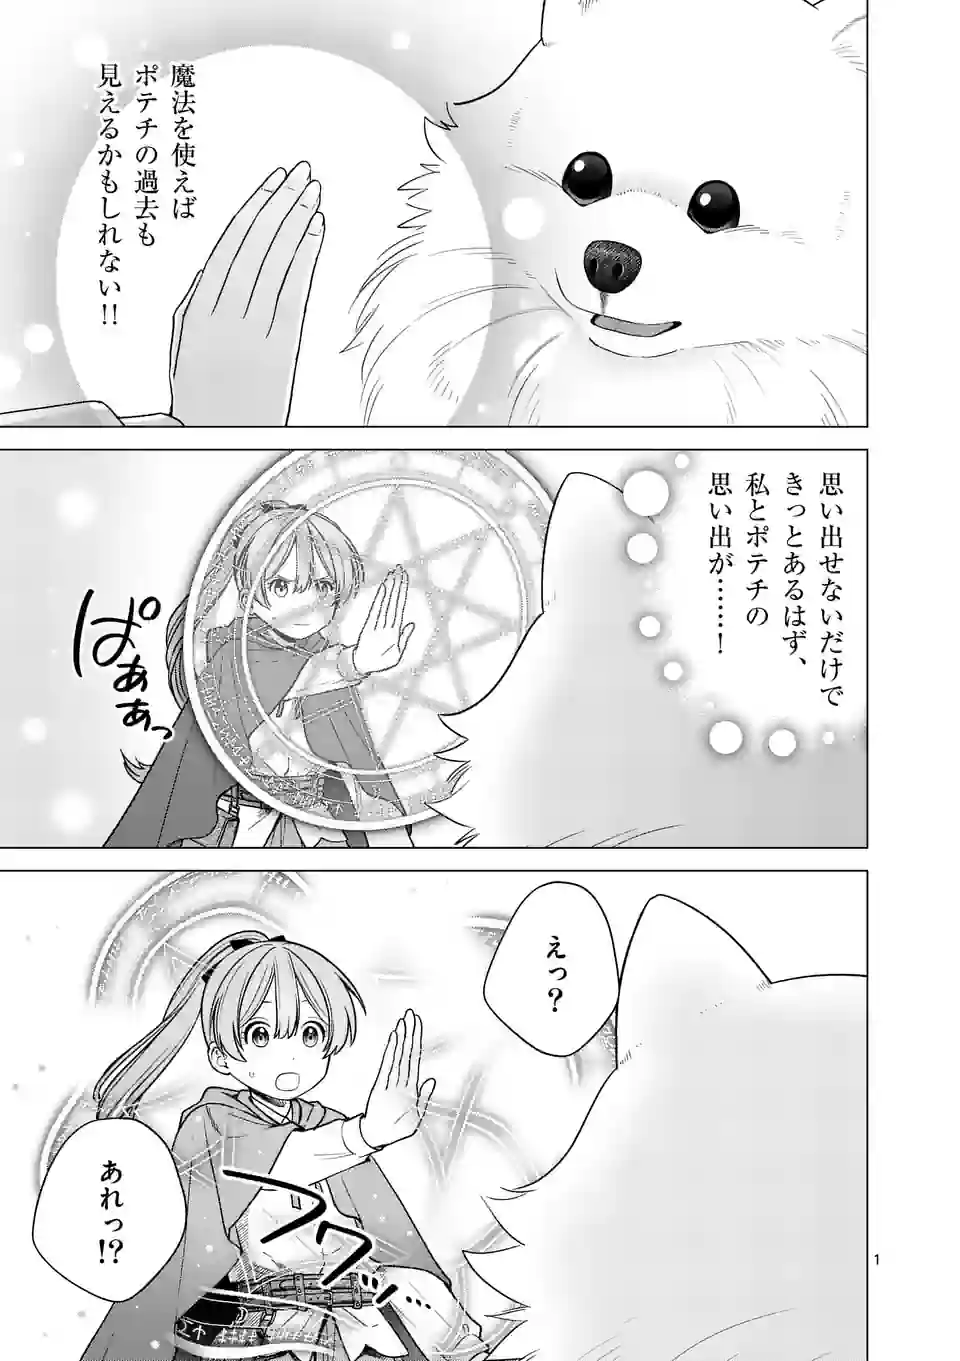 Isekai Pomeranian to Niji no Mofumofu Tabi - Chapter 4 - Page 1